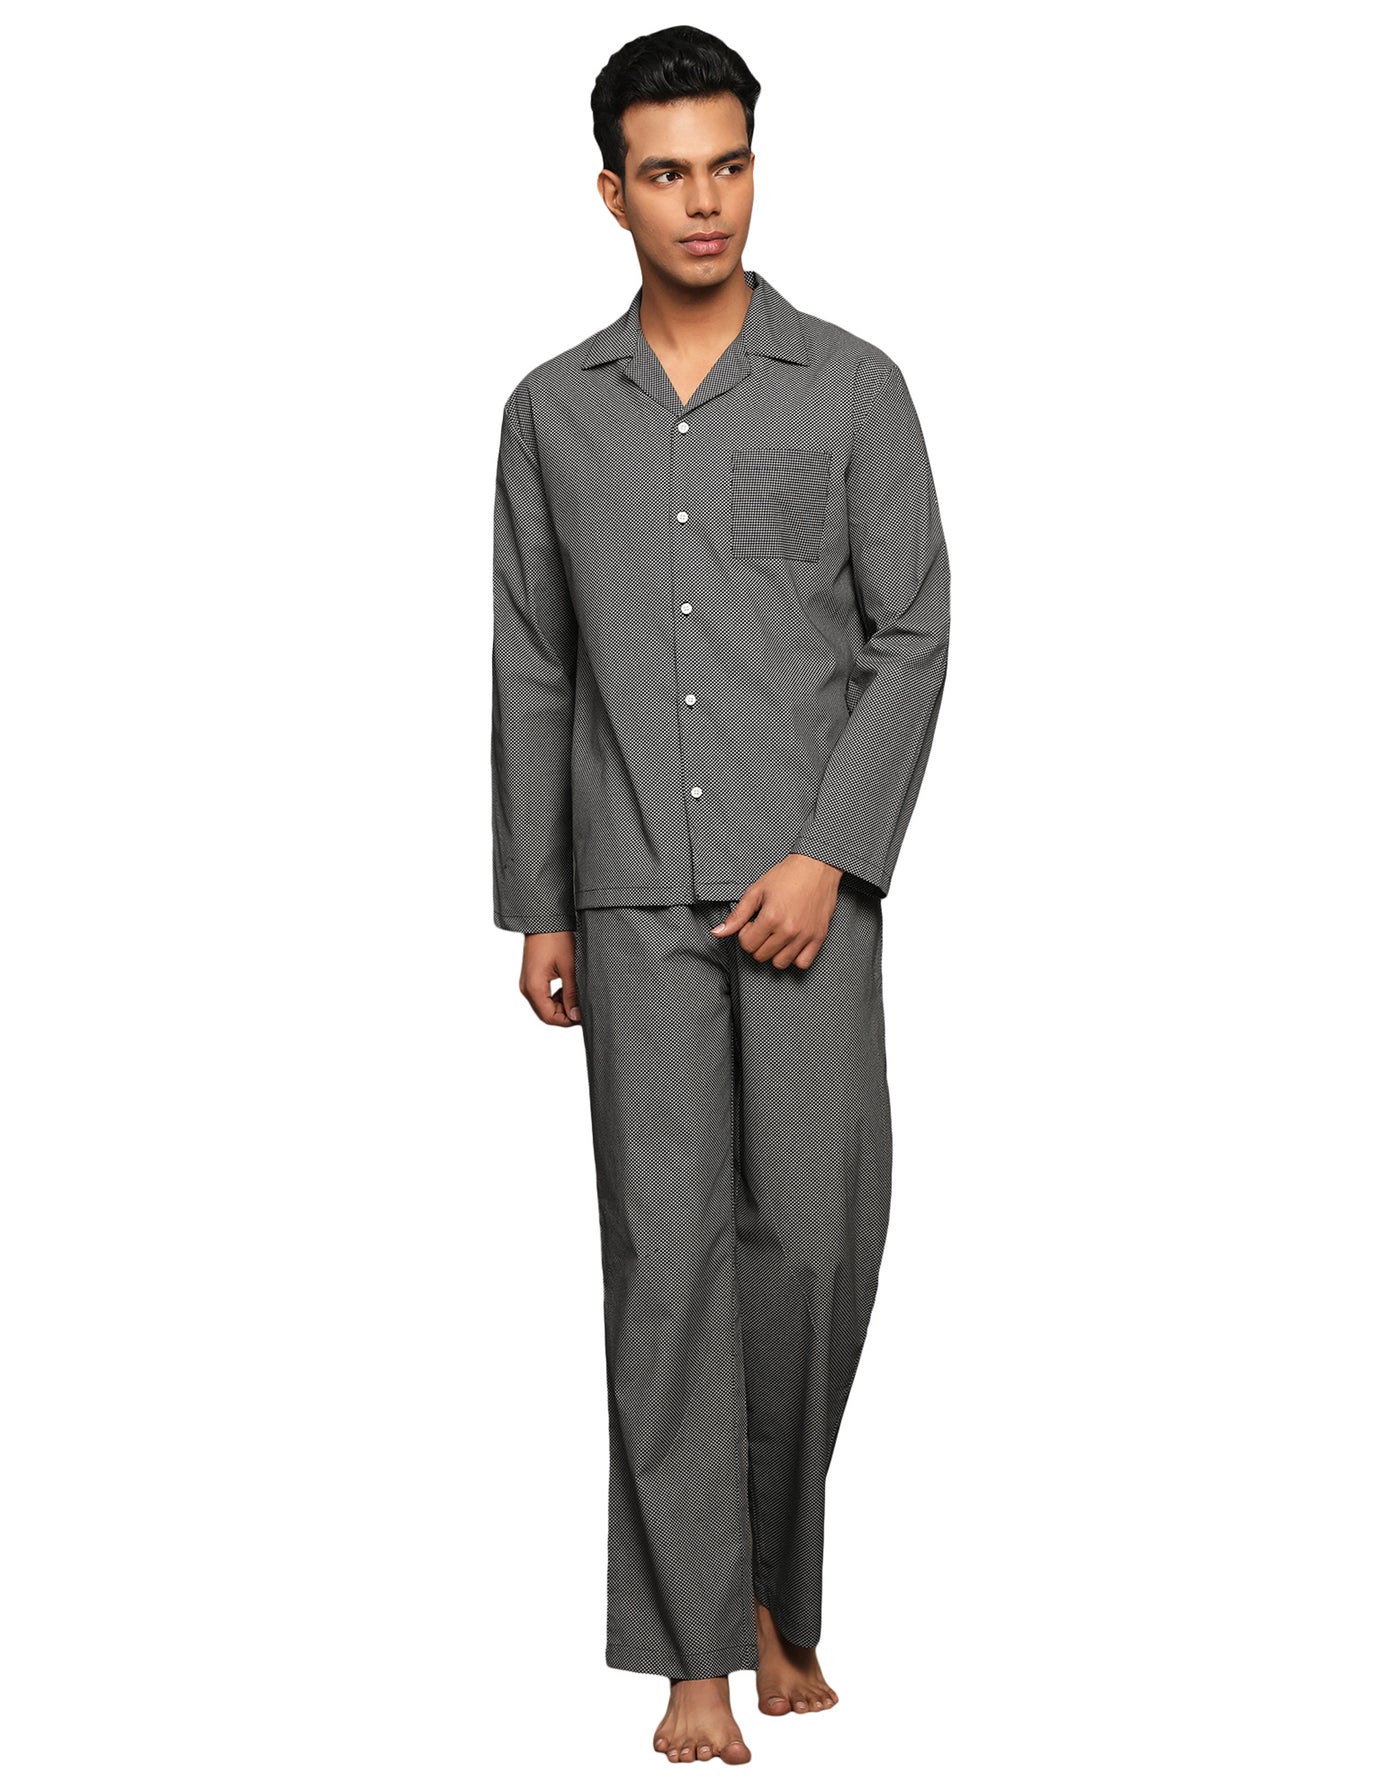 Pyjama Set for Men-Black Abstract Micro